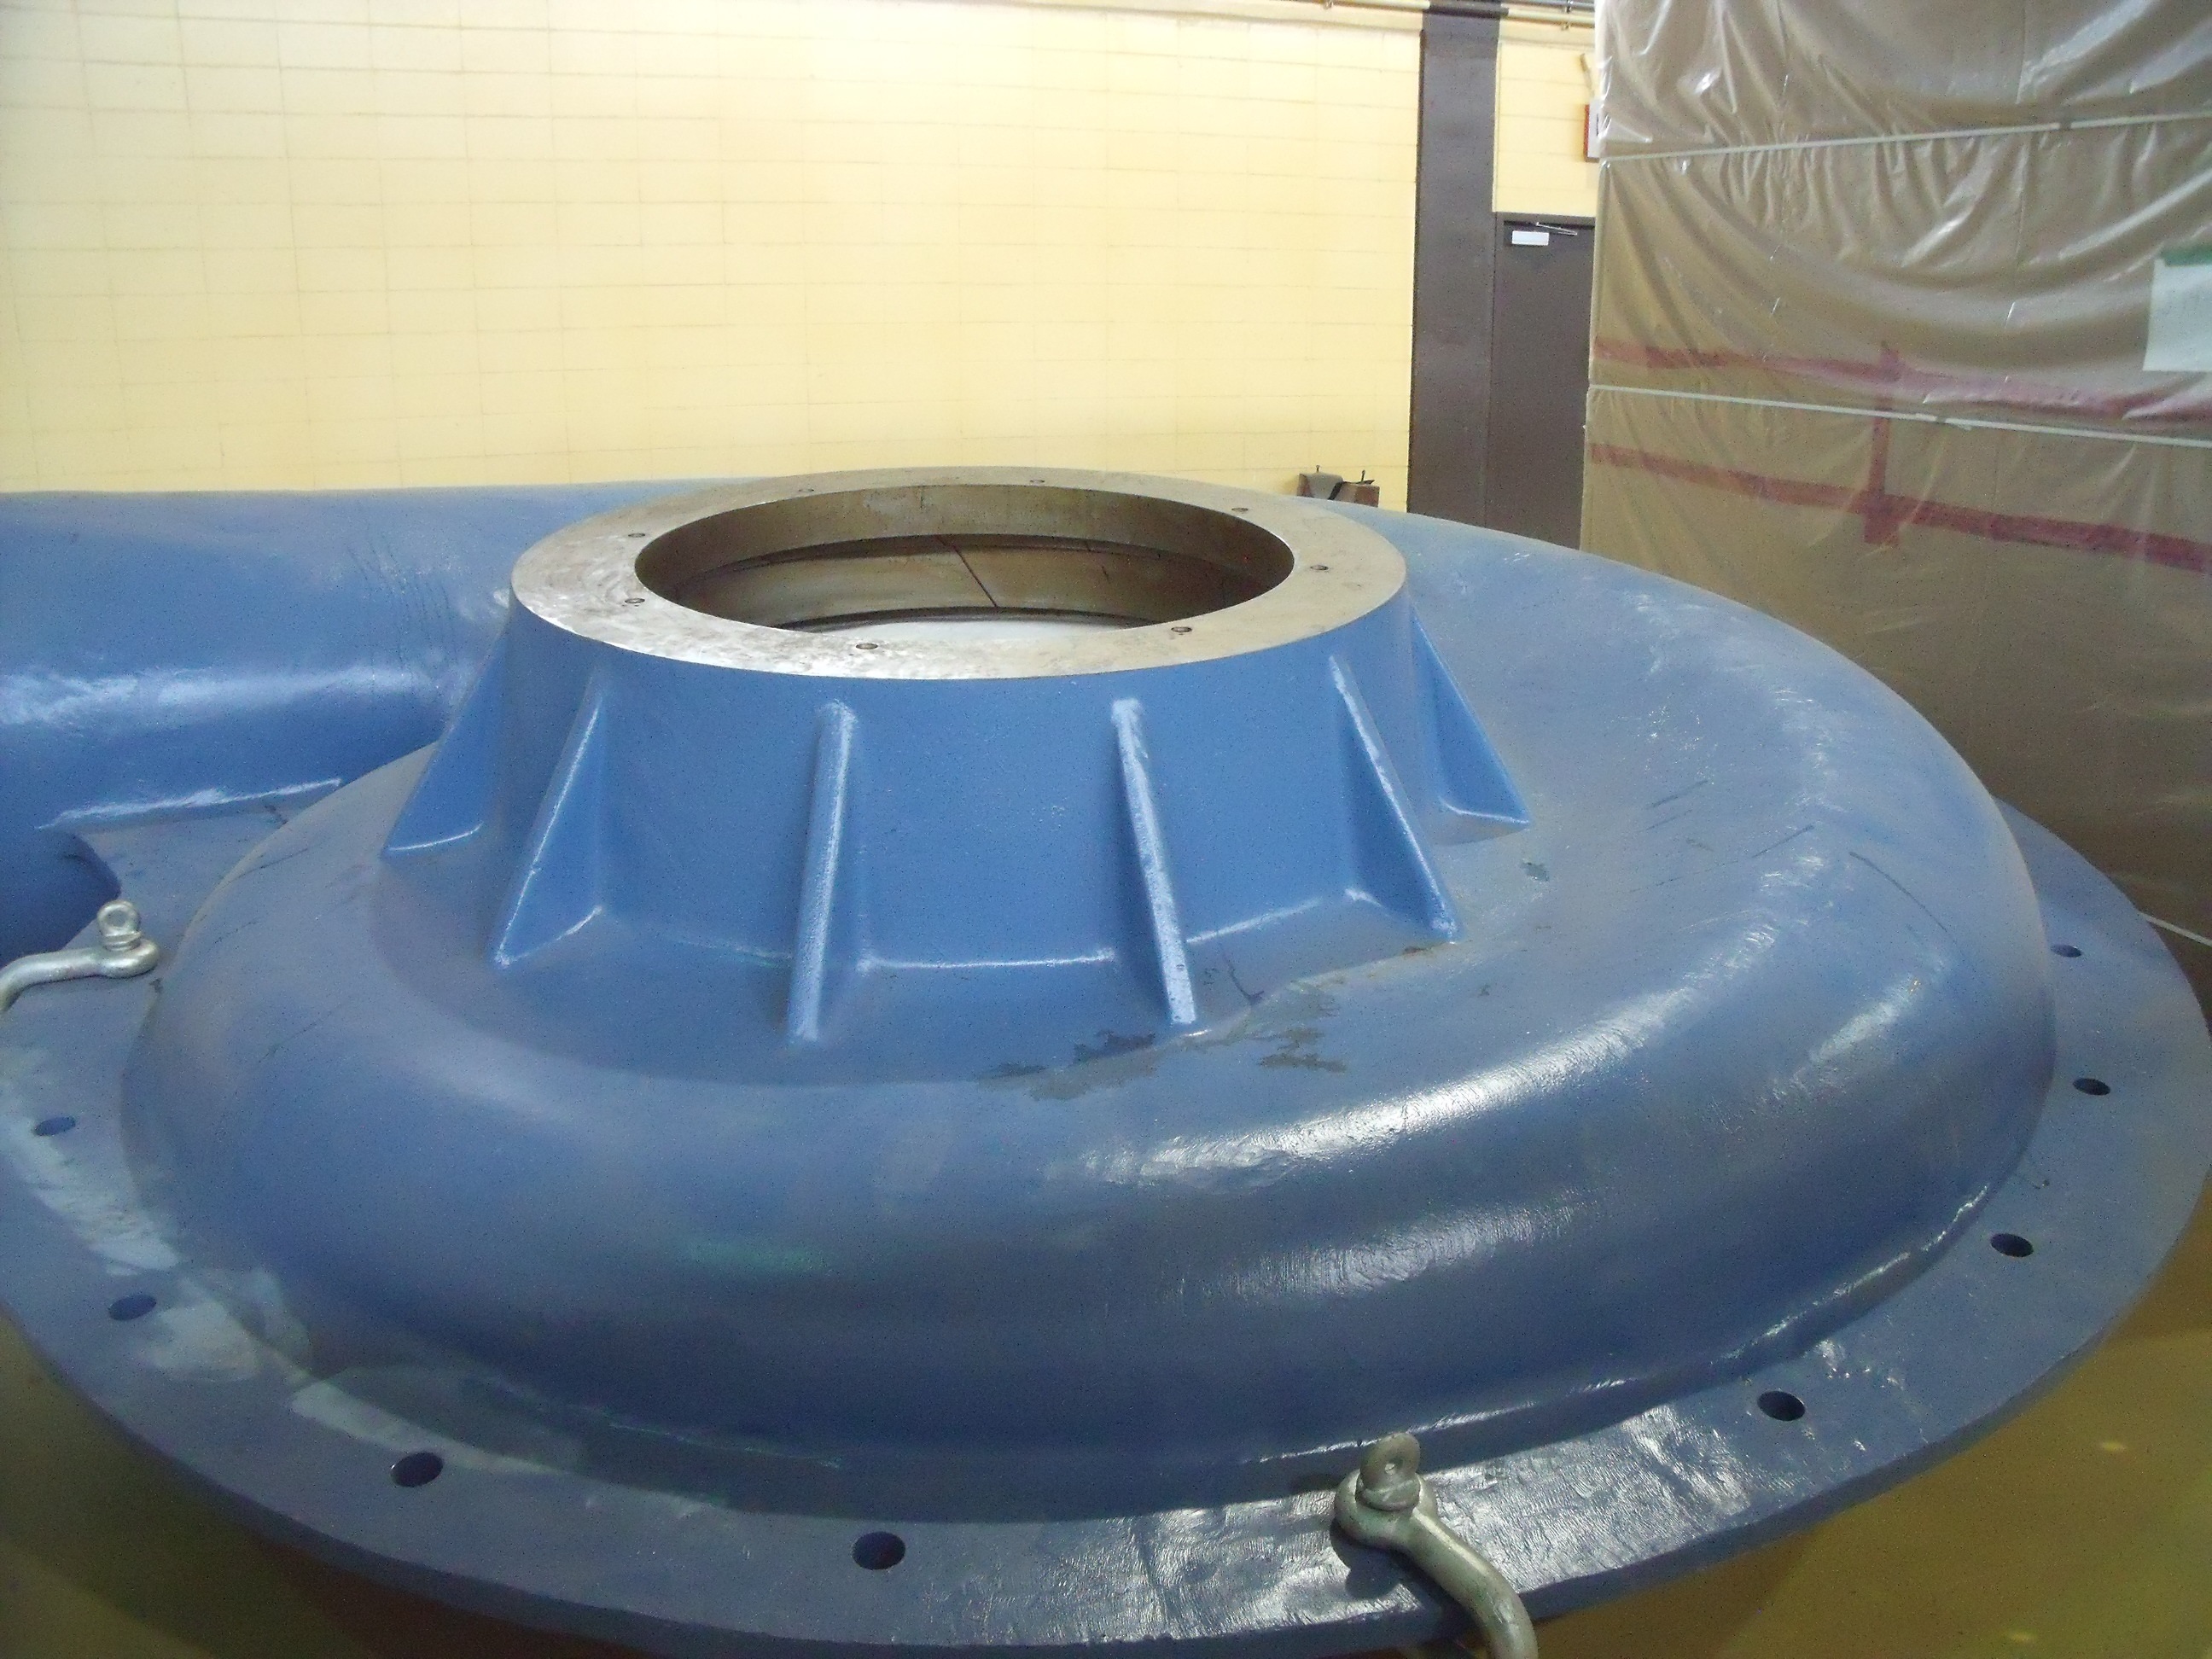 Figure 3. The 38 ton pump has an impeller diameter of 1,905 mm. (Image: KSB )